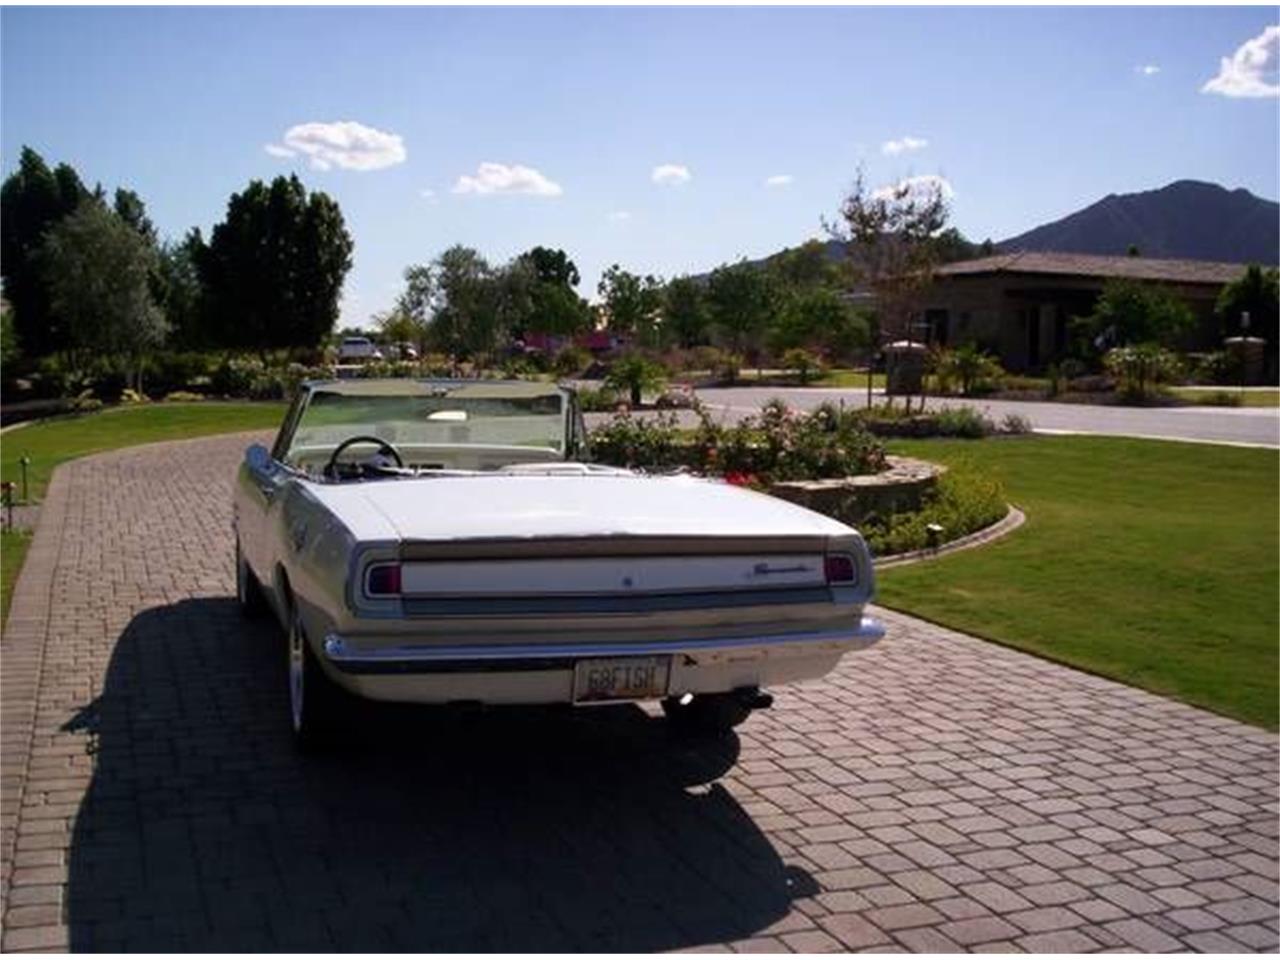 1968 Plymouth Barracuda for sale in Cadillac, MI